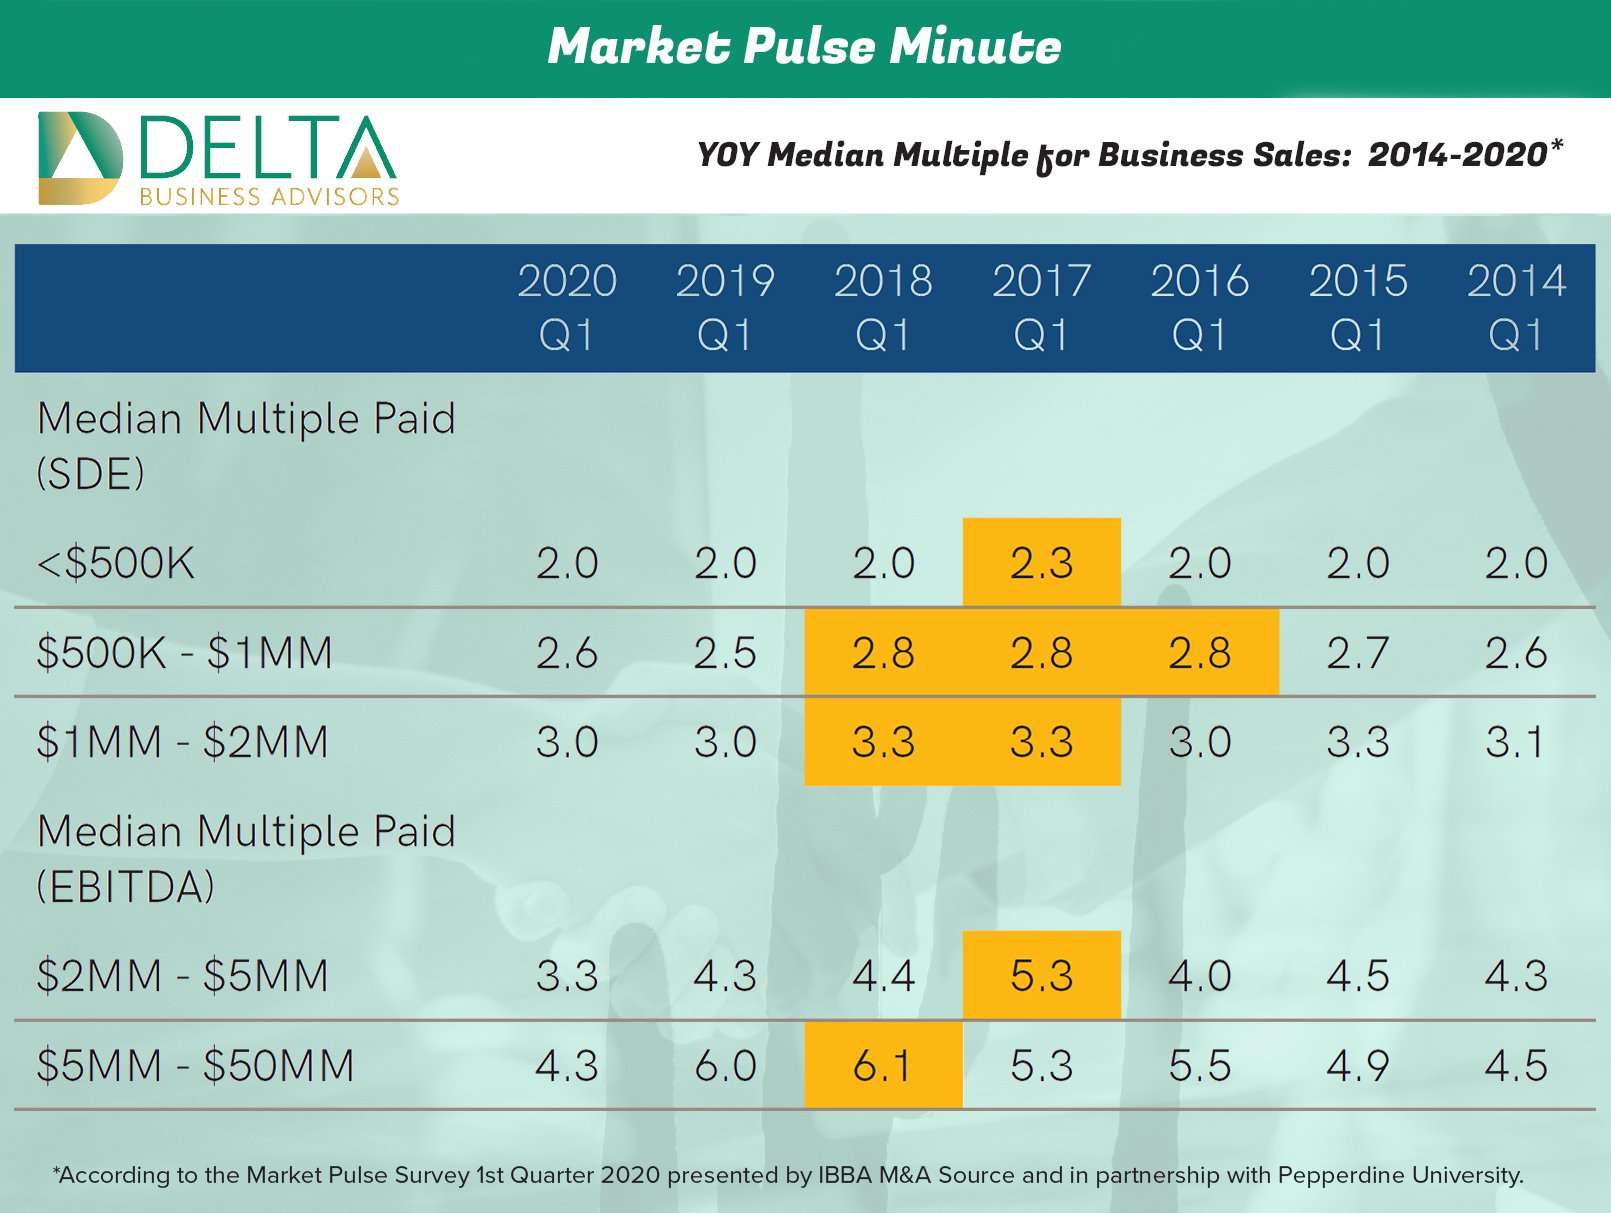 YOY Median Multiple for Business Sales: 2014-2020